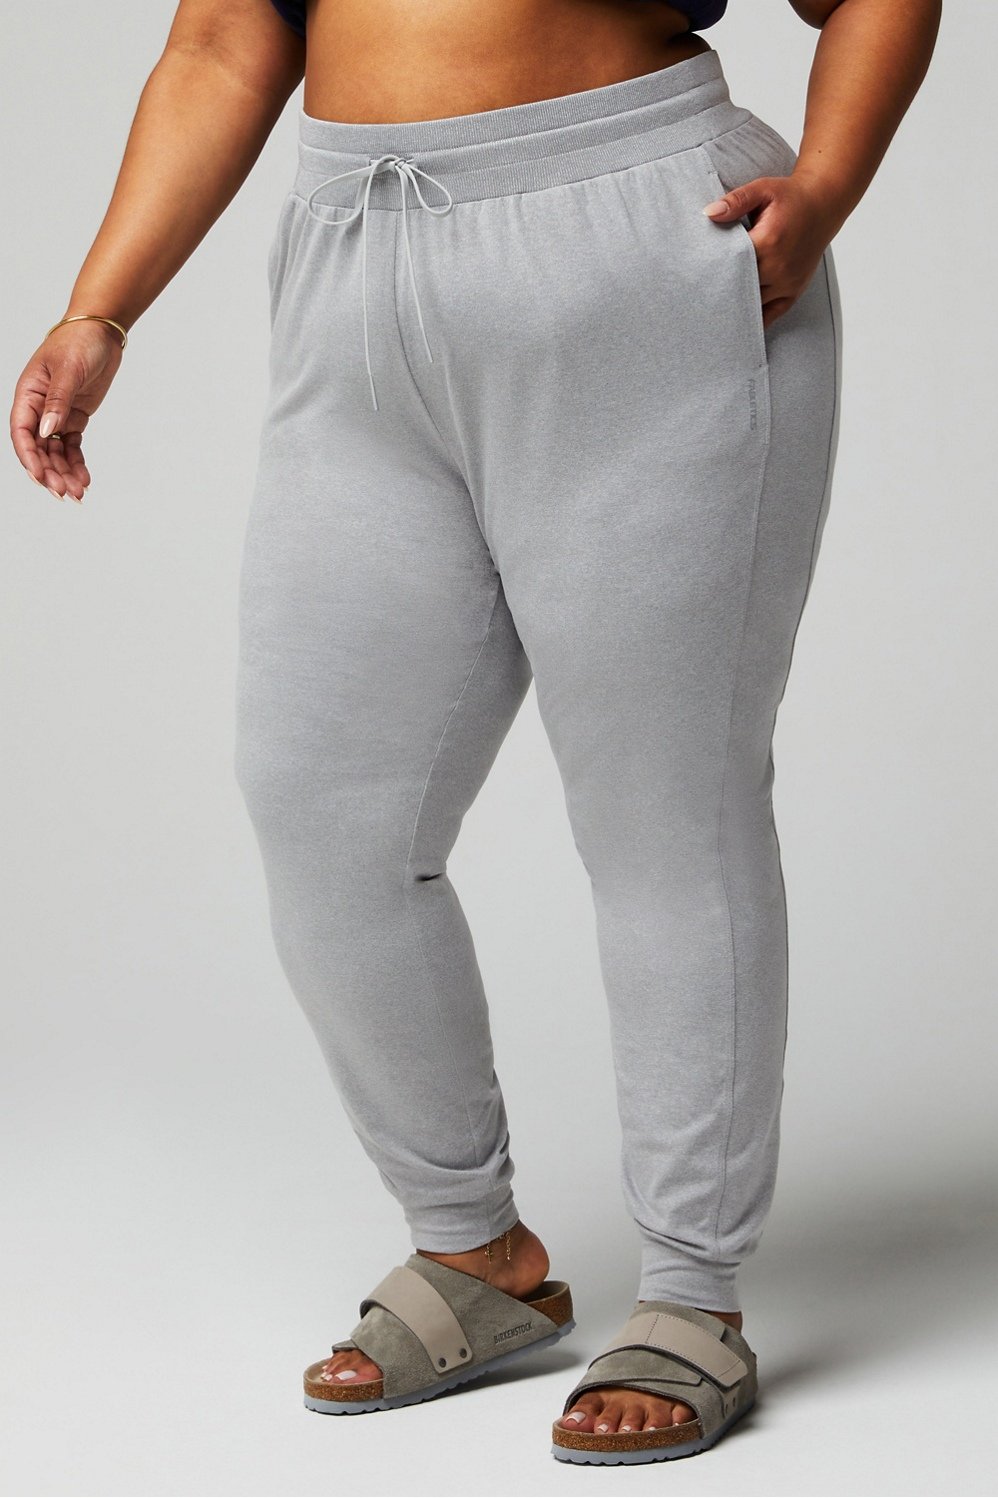 Cathalem Yoga Pants plus Size for Women Petite Women Solid Workout